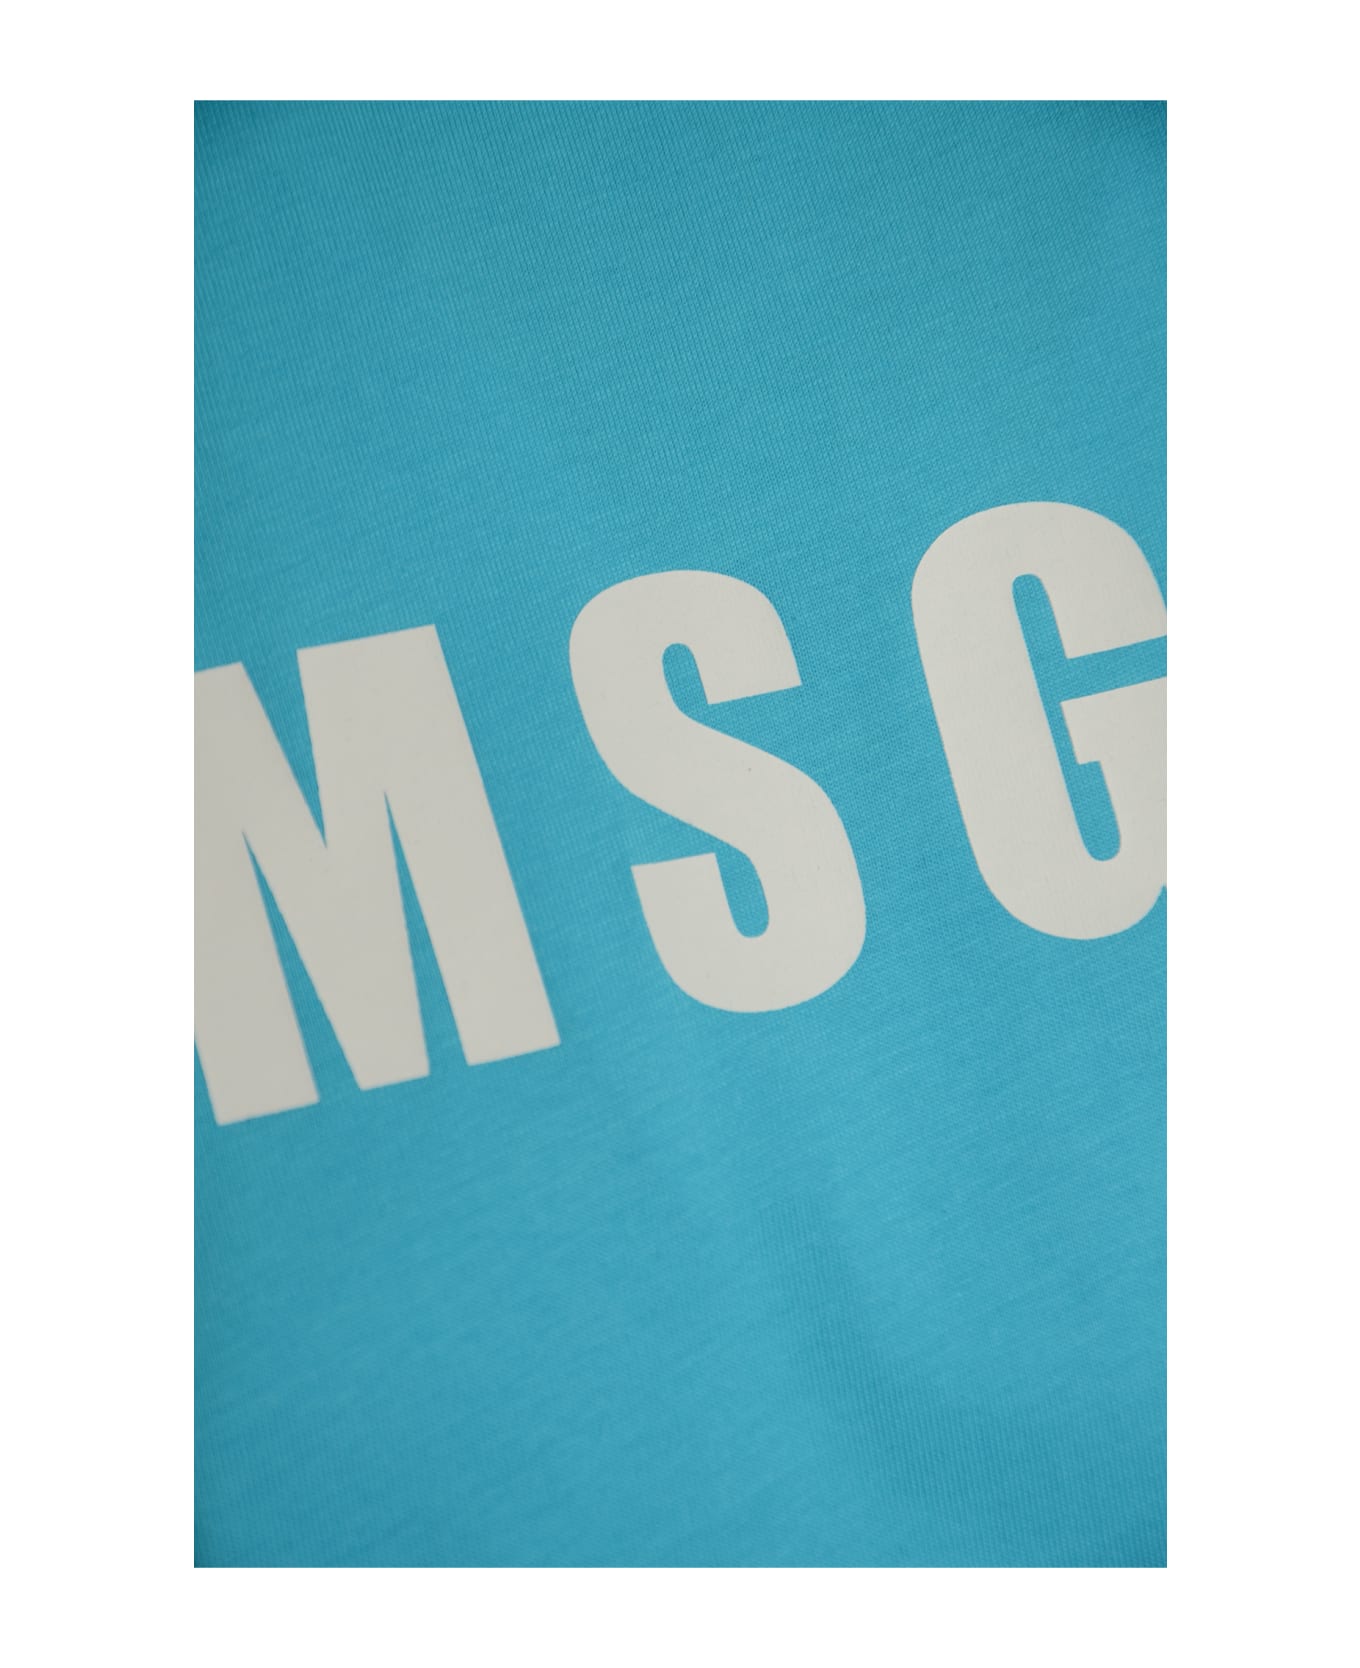 MSGM Logo Print T-shirt - Light Blue